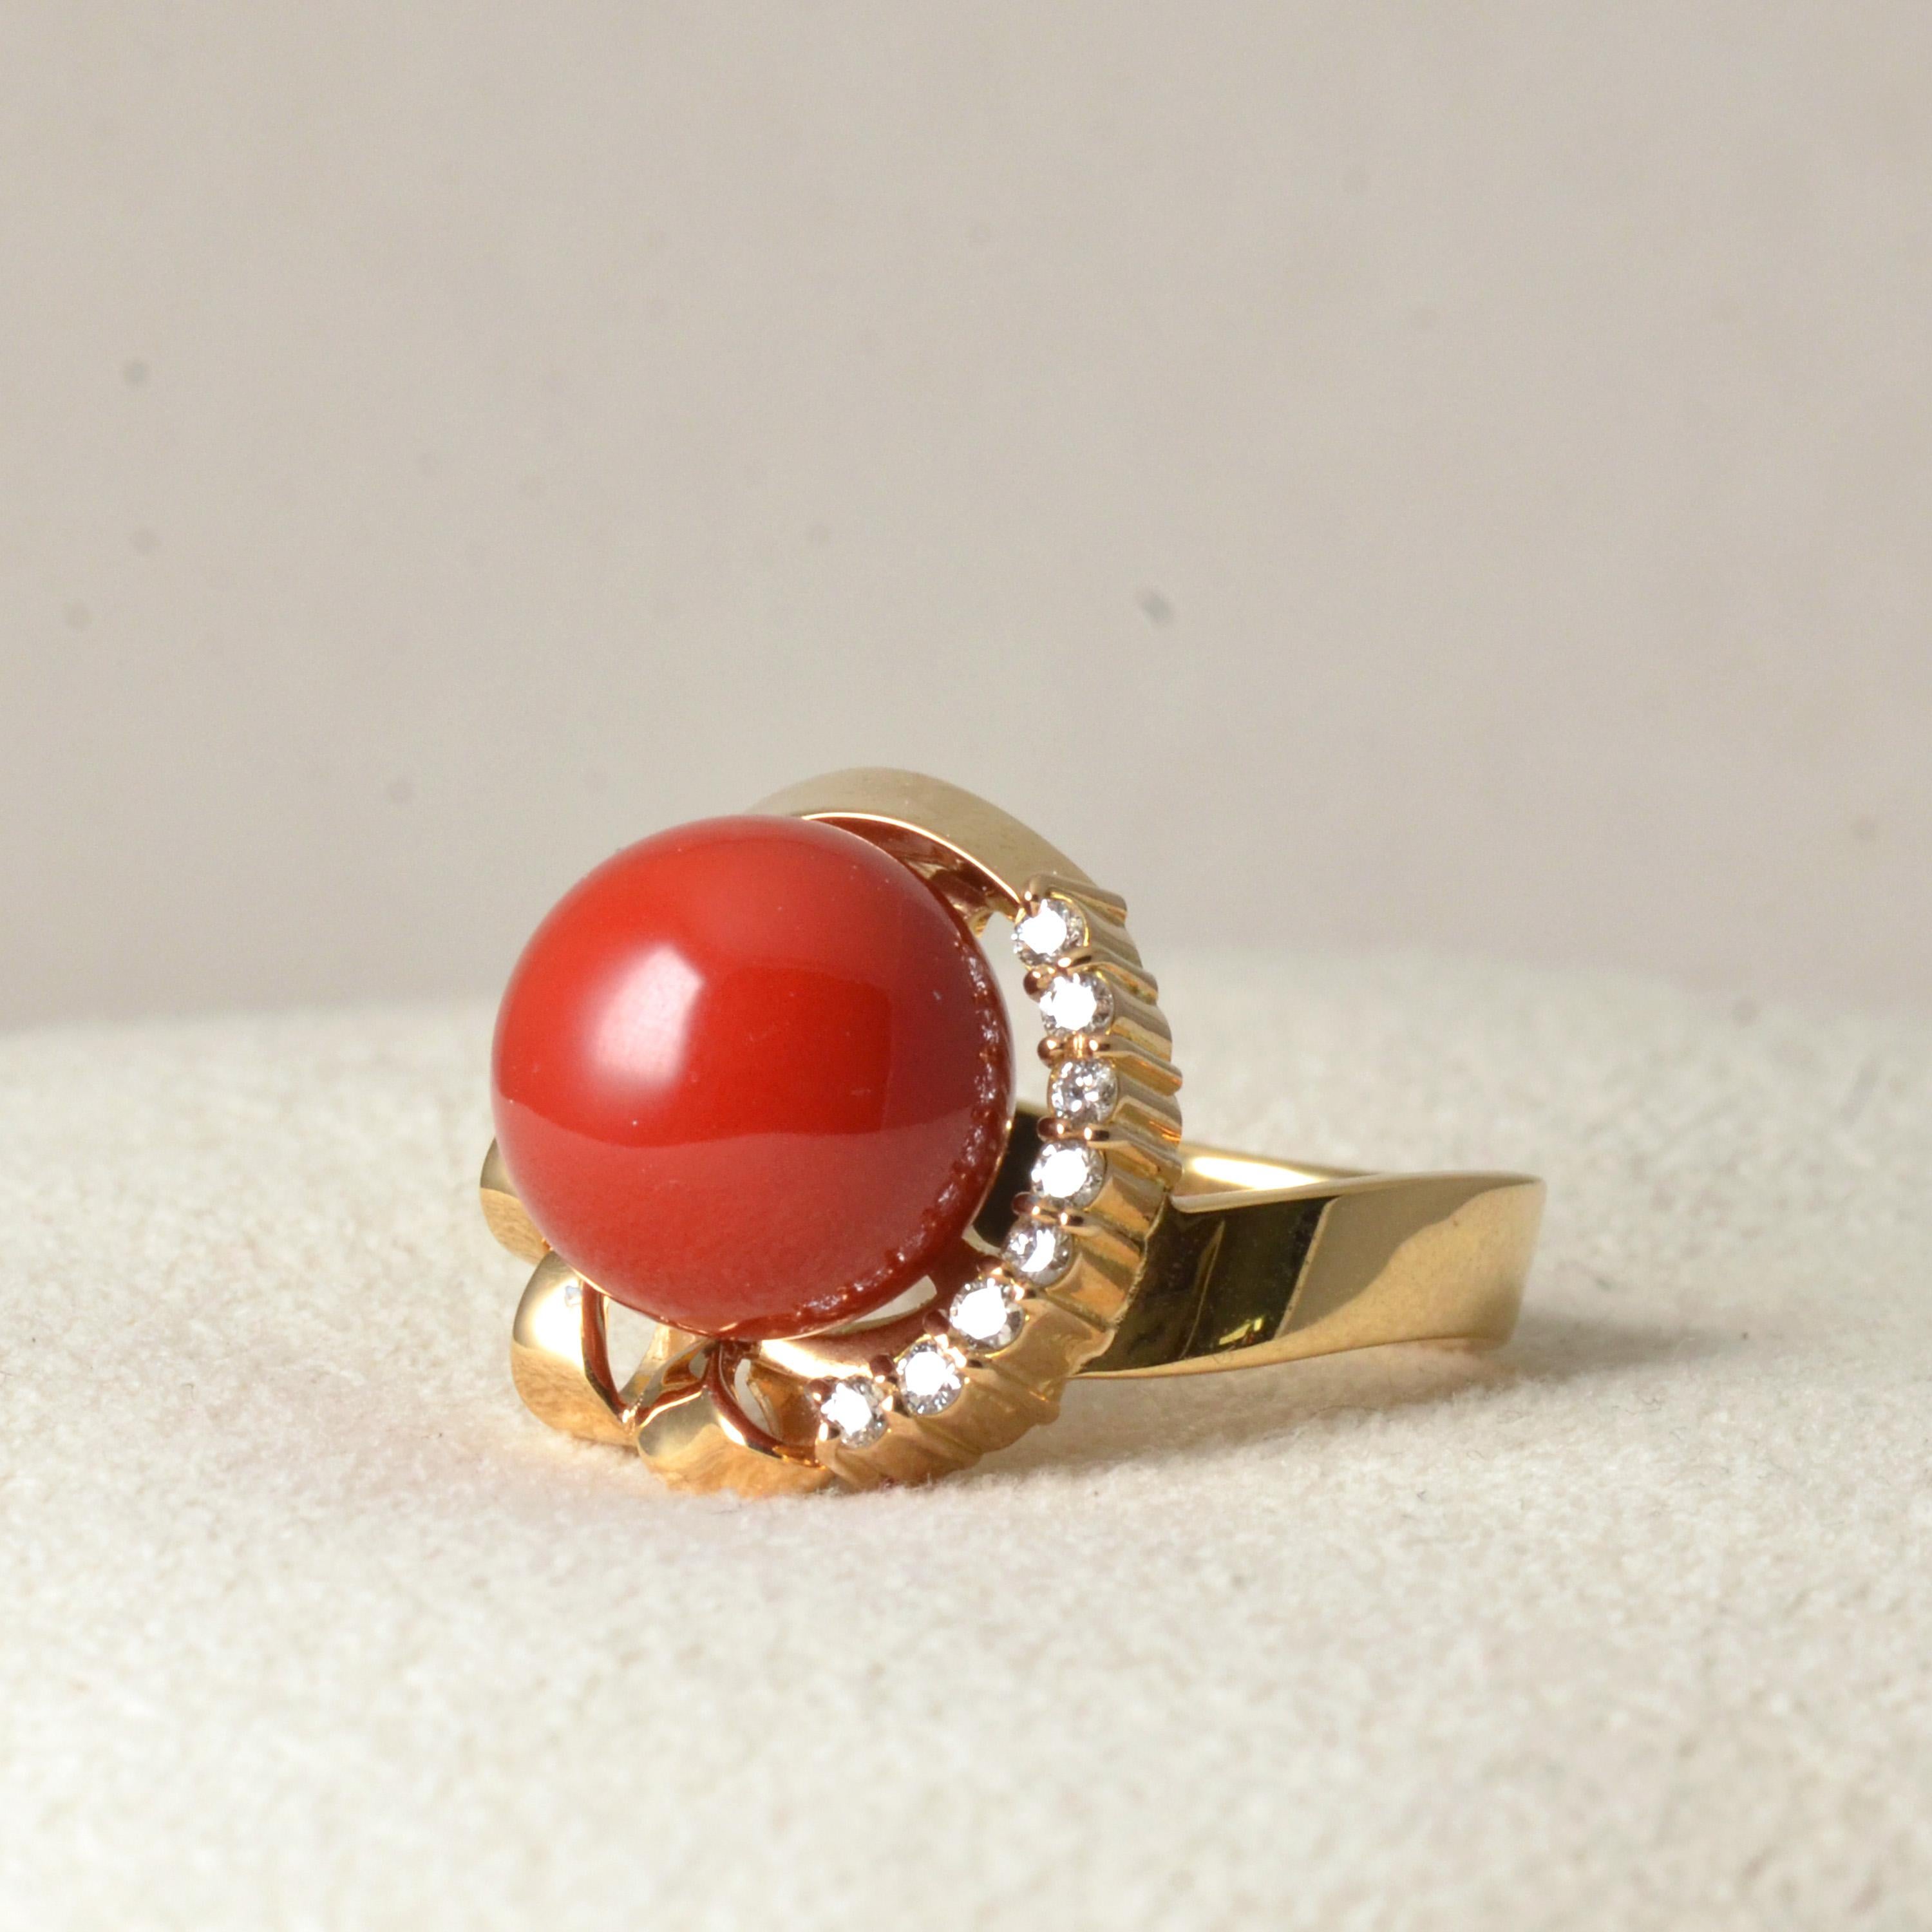 18 Karat Yellow Gold Vintage Oxblood Coral Ring with Diamonds 6